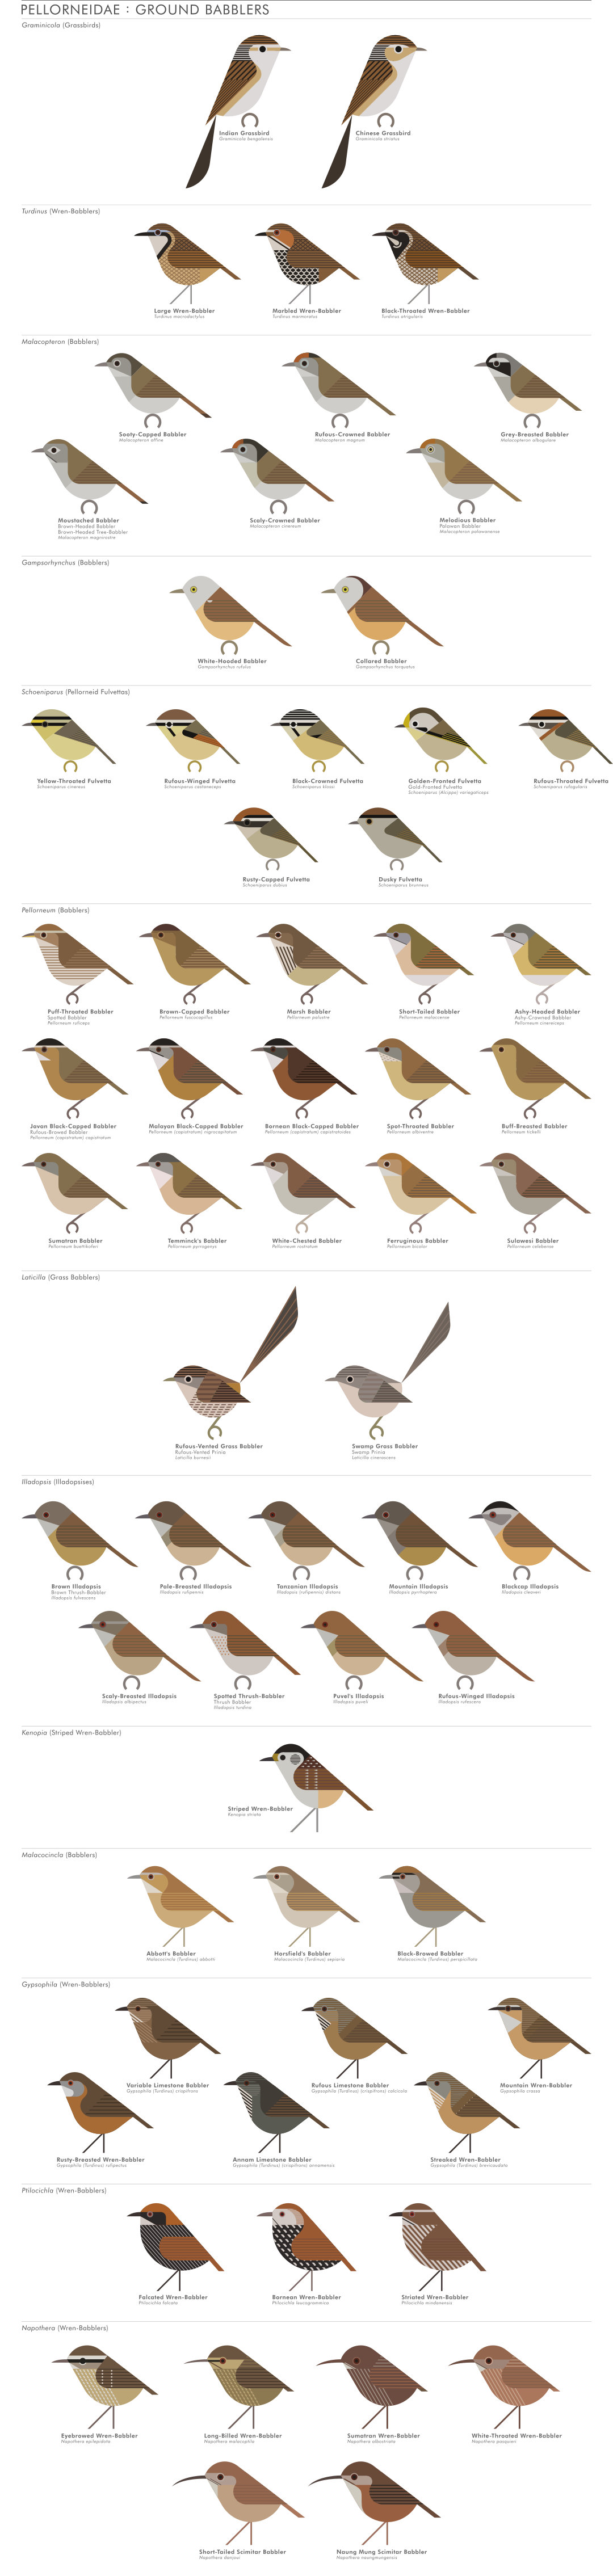 scott partridge - AVE - avian vector encyclopedia - ground babblers - bird vector art